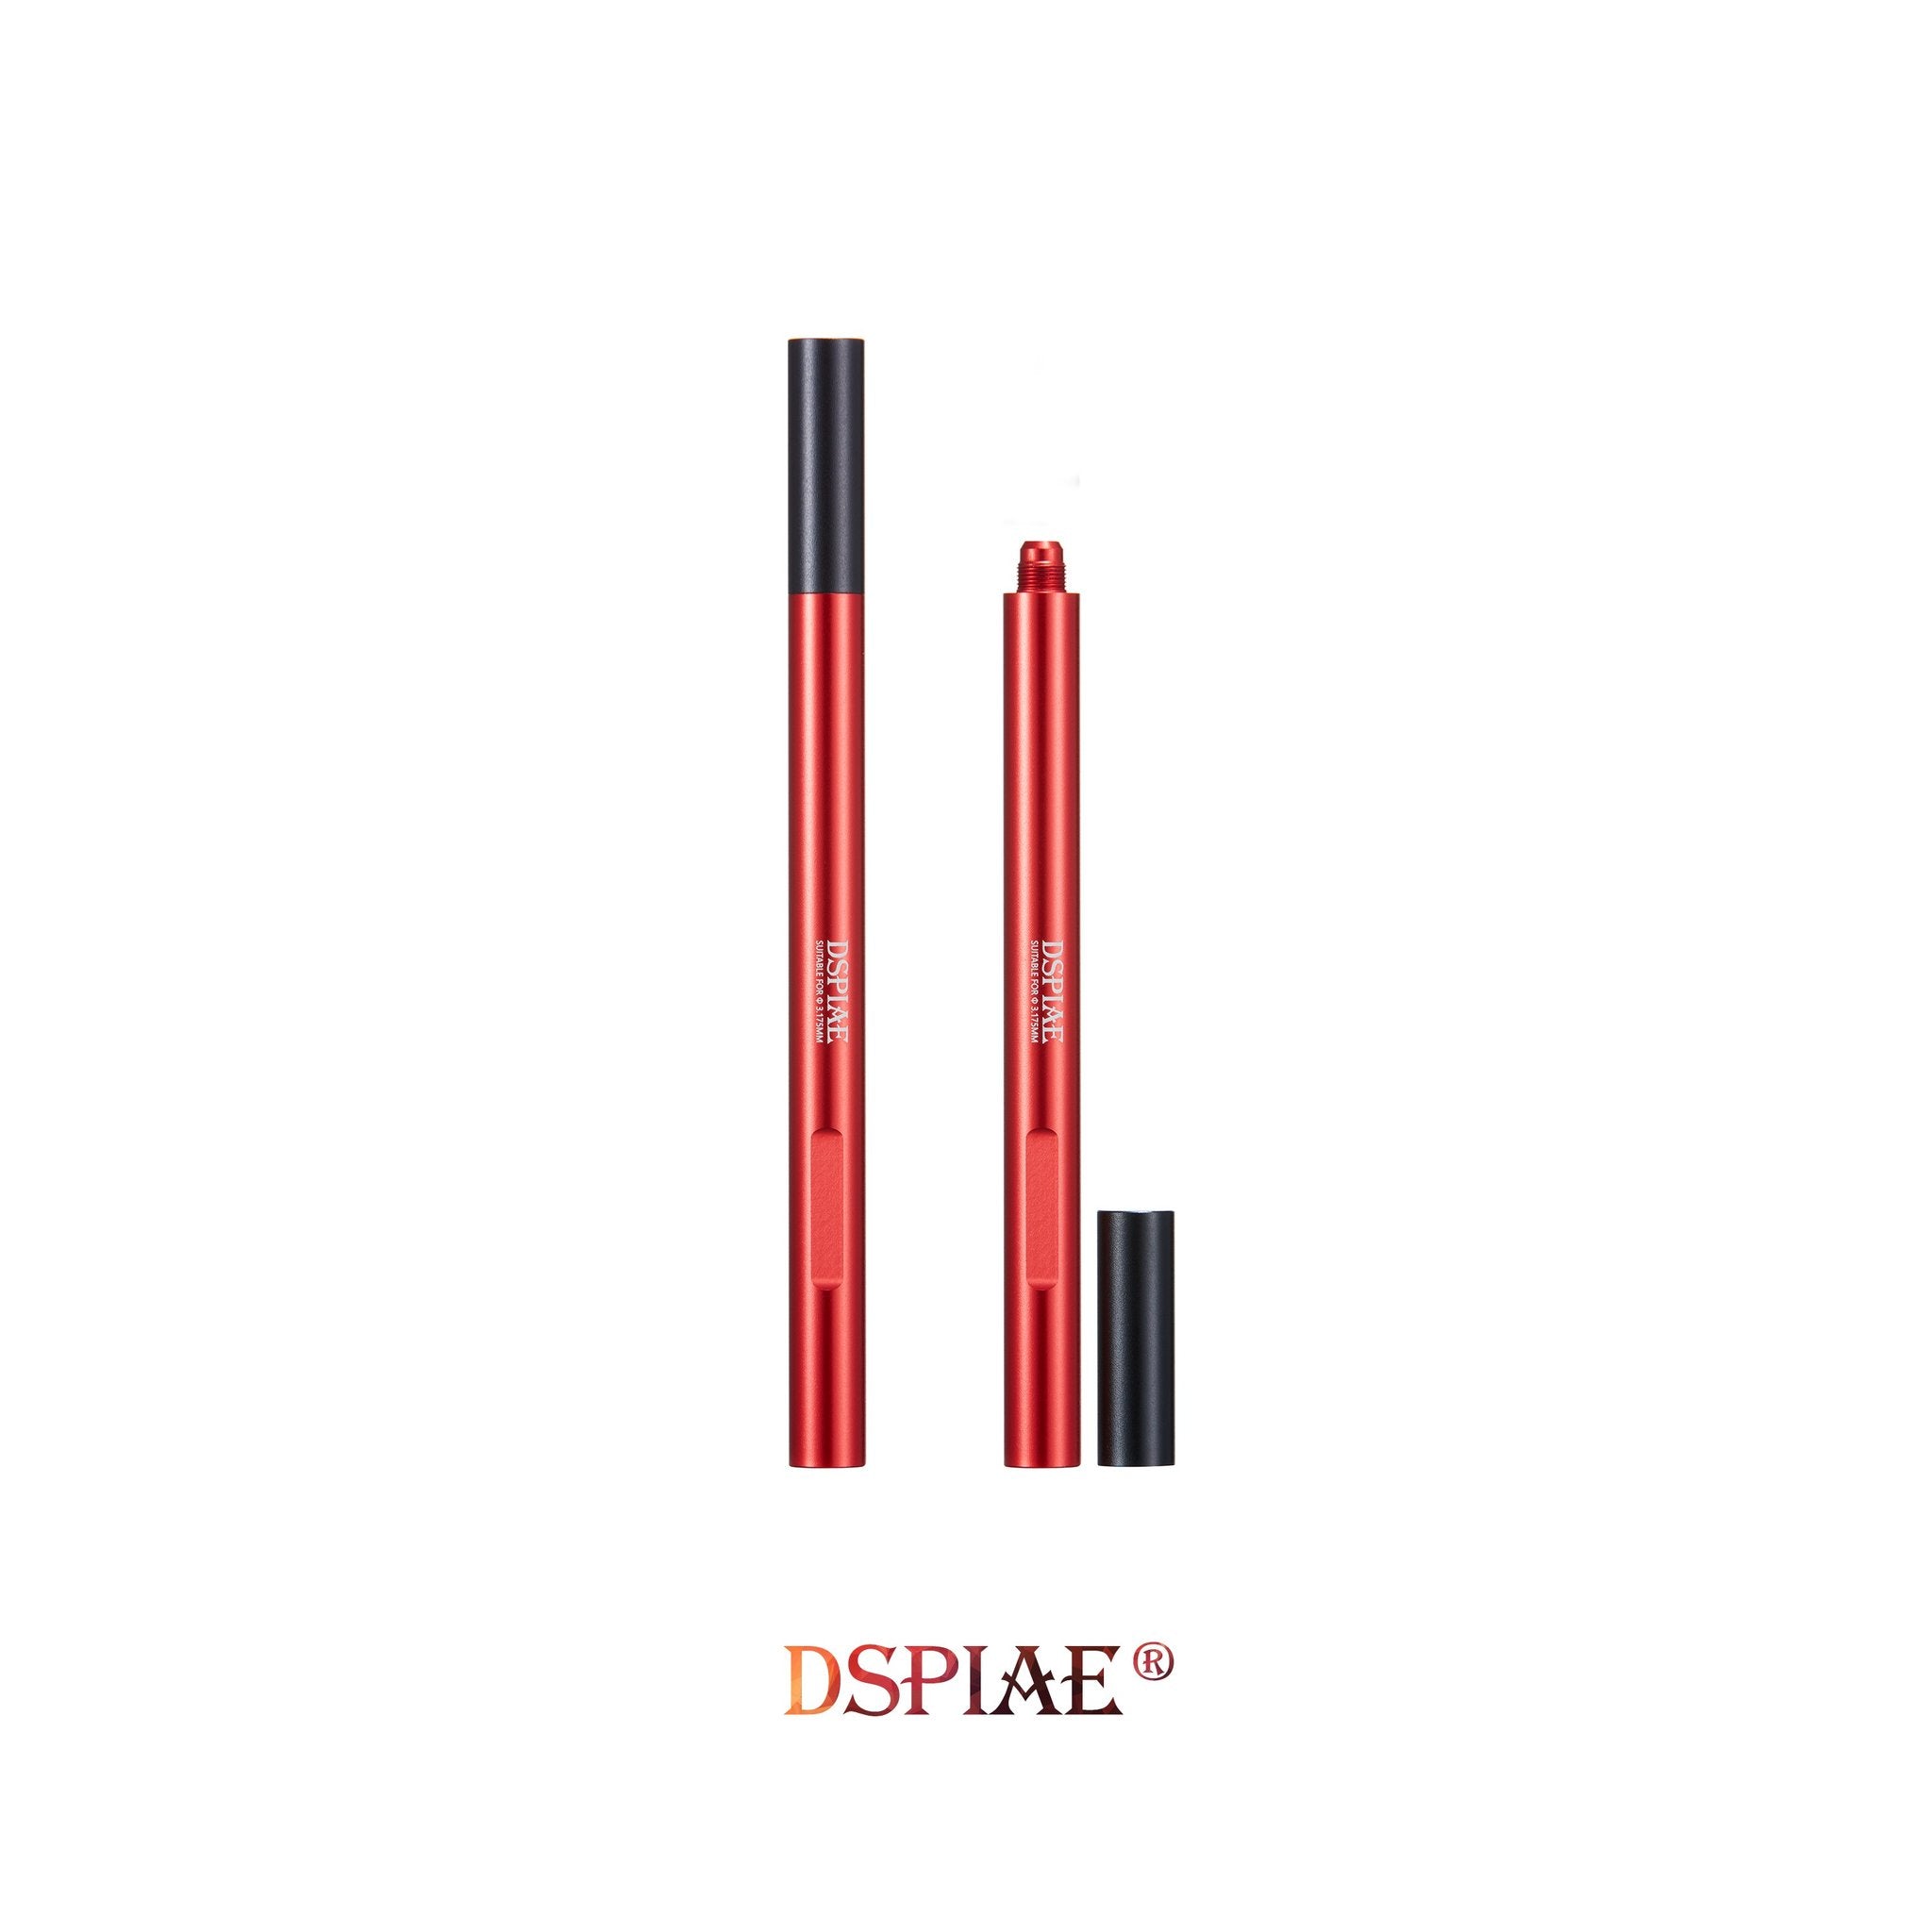 DSPIAE: Push Broach Chisel 5-Piece Set (0.1mm, 0.15mm, 0.3mm, 0.5mm, 1.0mm)